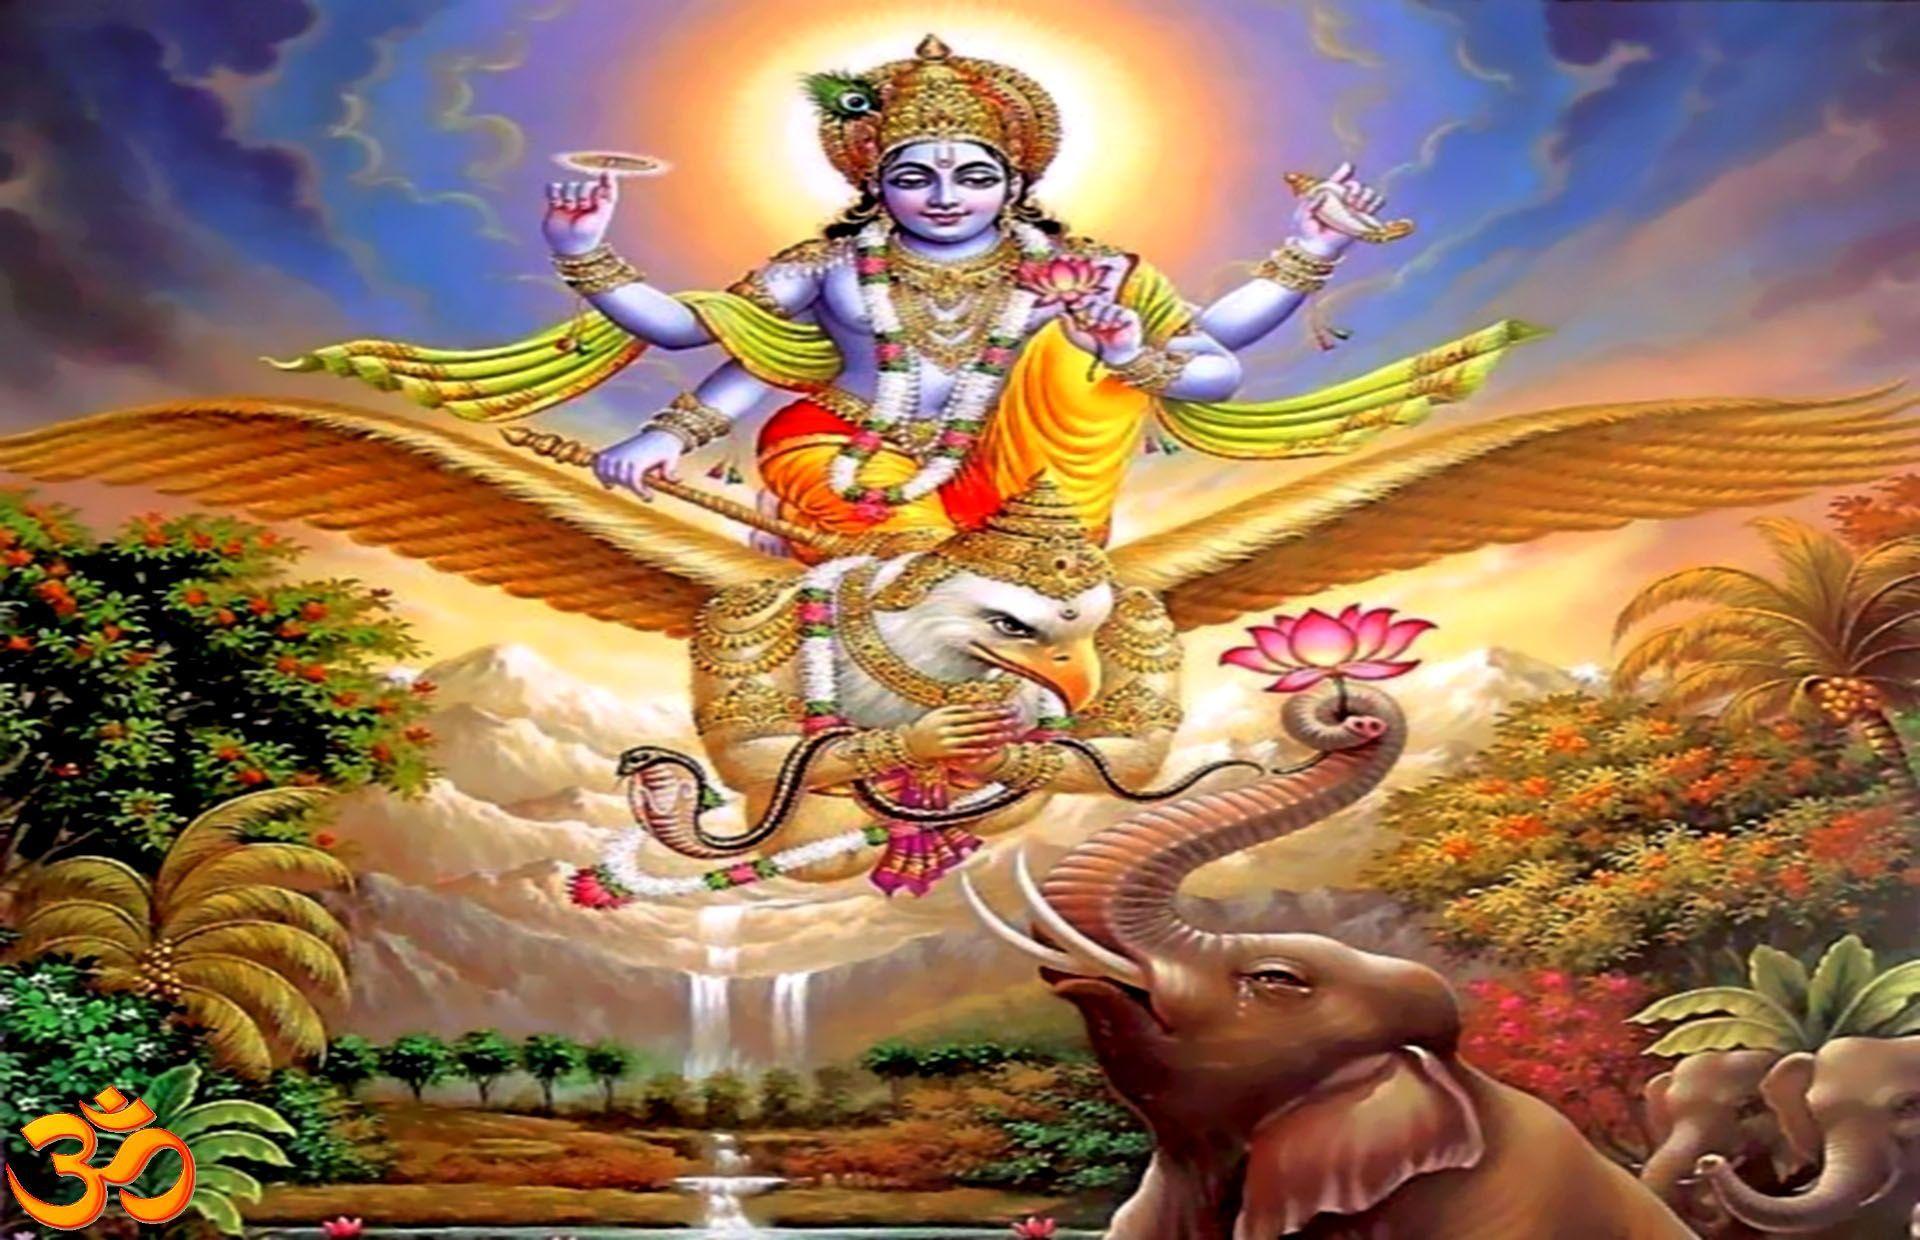 Vishnu Wallpapers - Top Free Vishnu Backgrounds ...